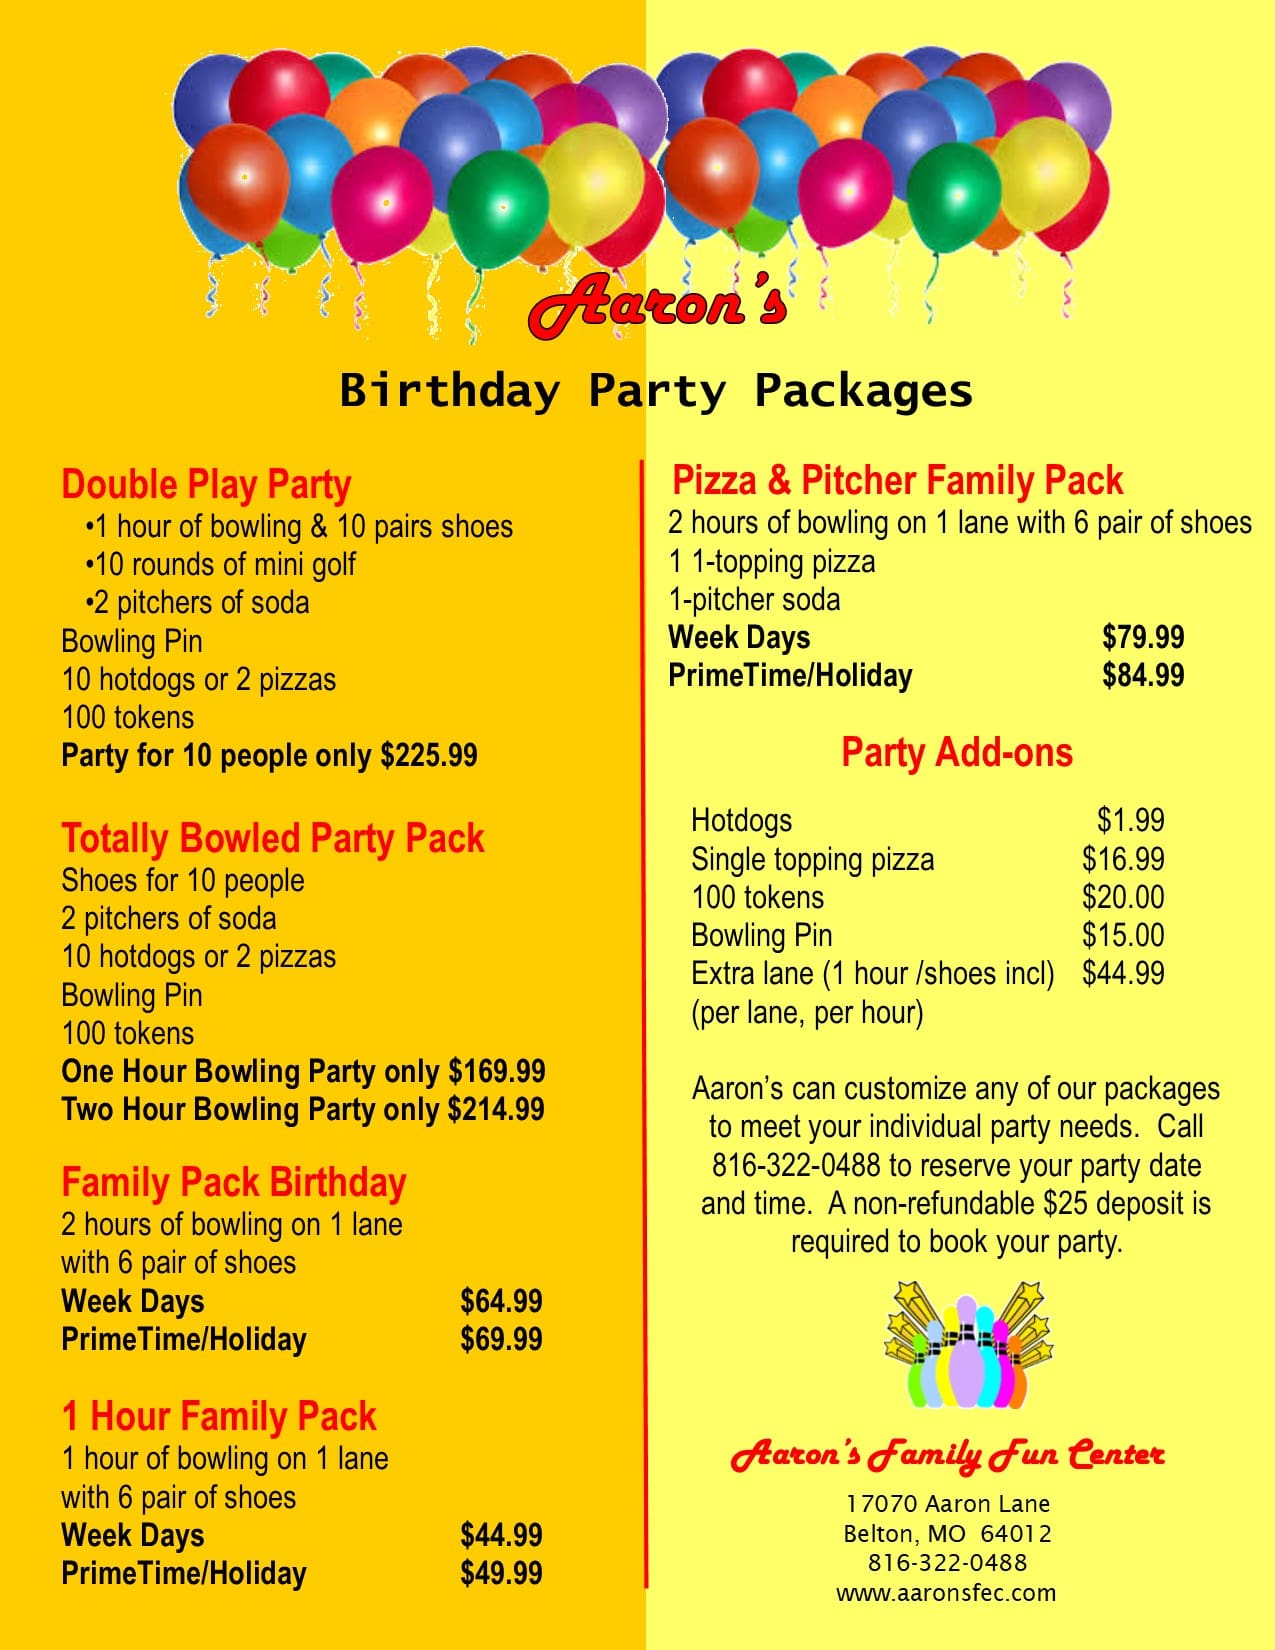 Birthday party deals